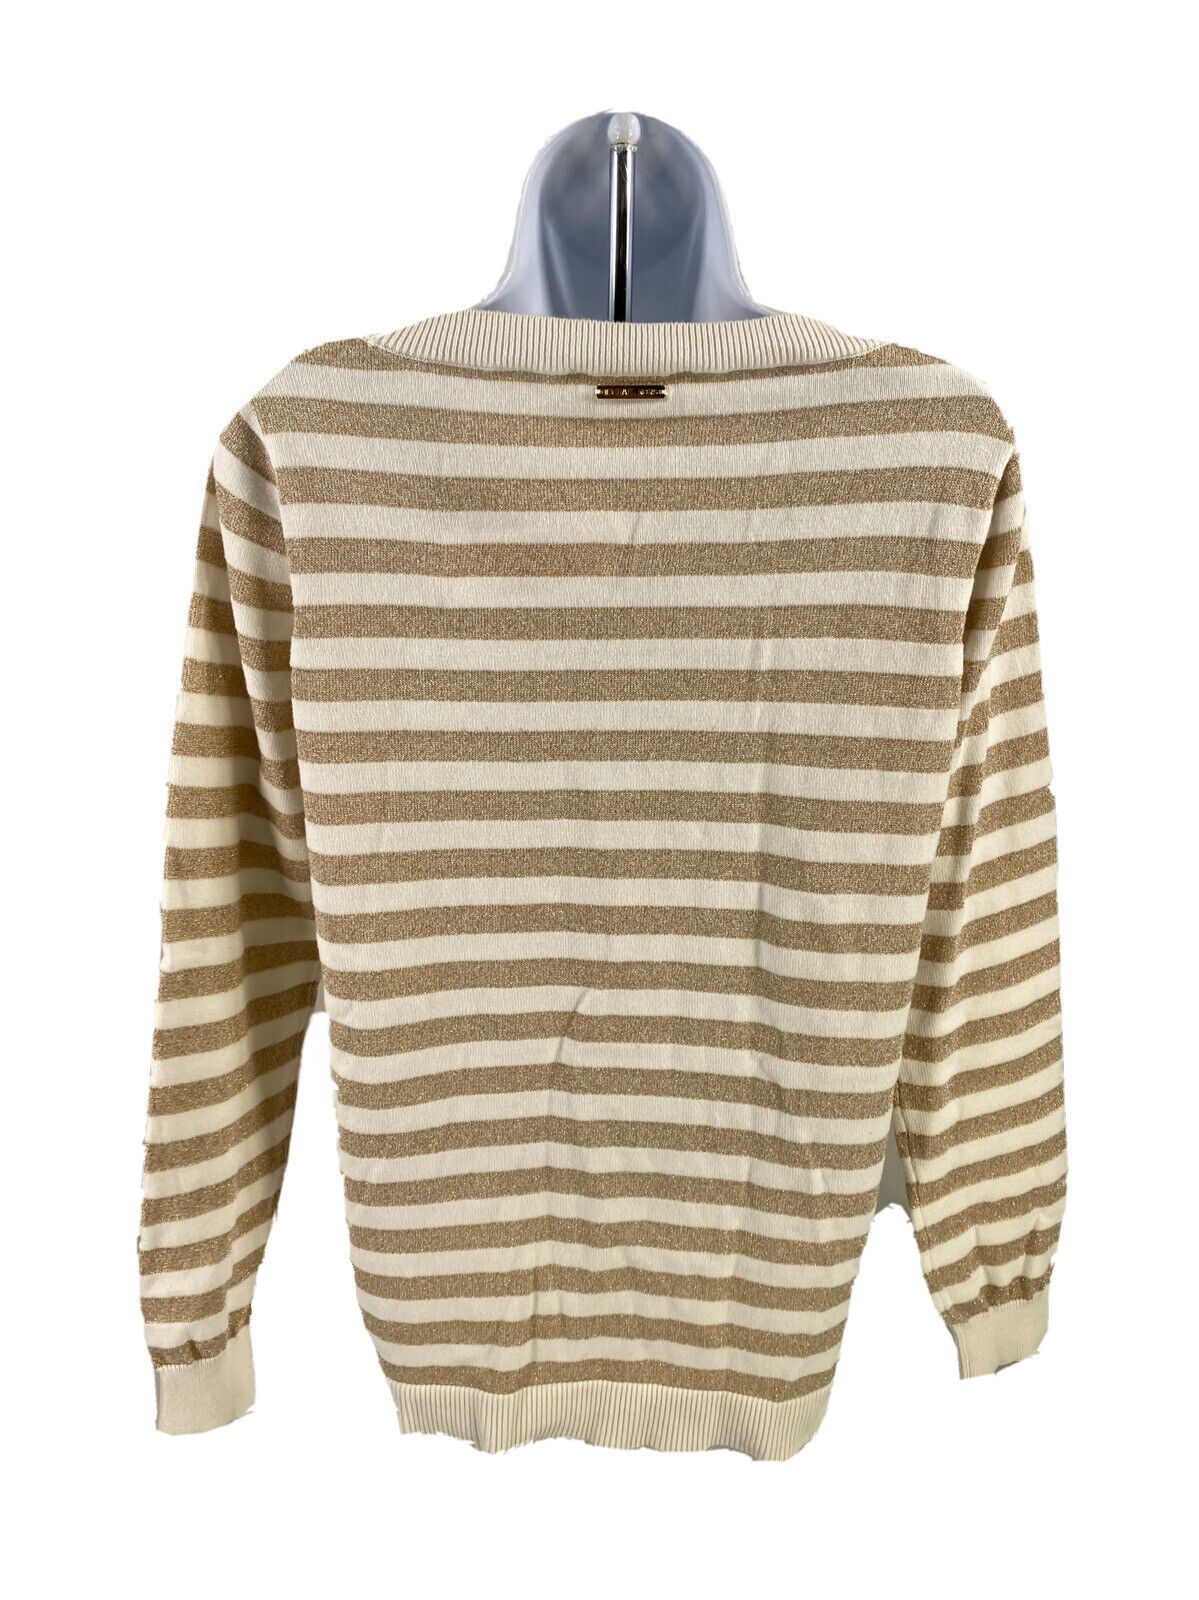 Michael Kors Women's White/Gold Metallic Striped Thin Knit Sweater - M